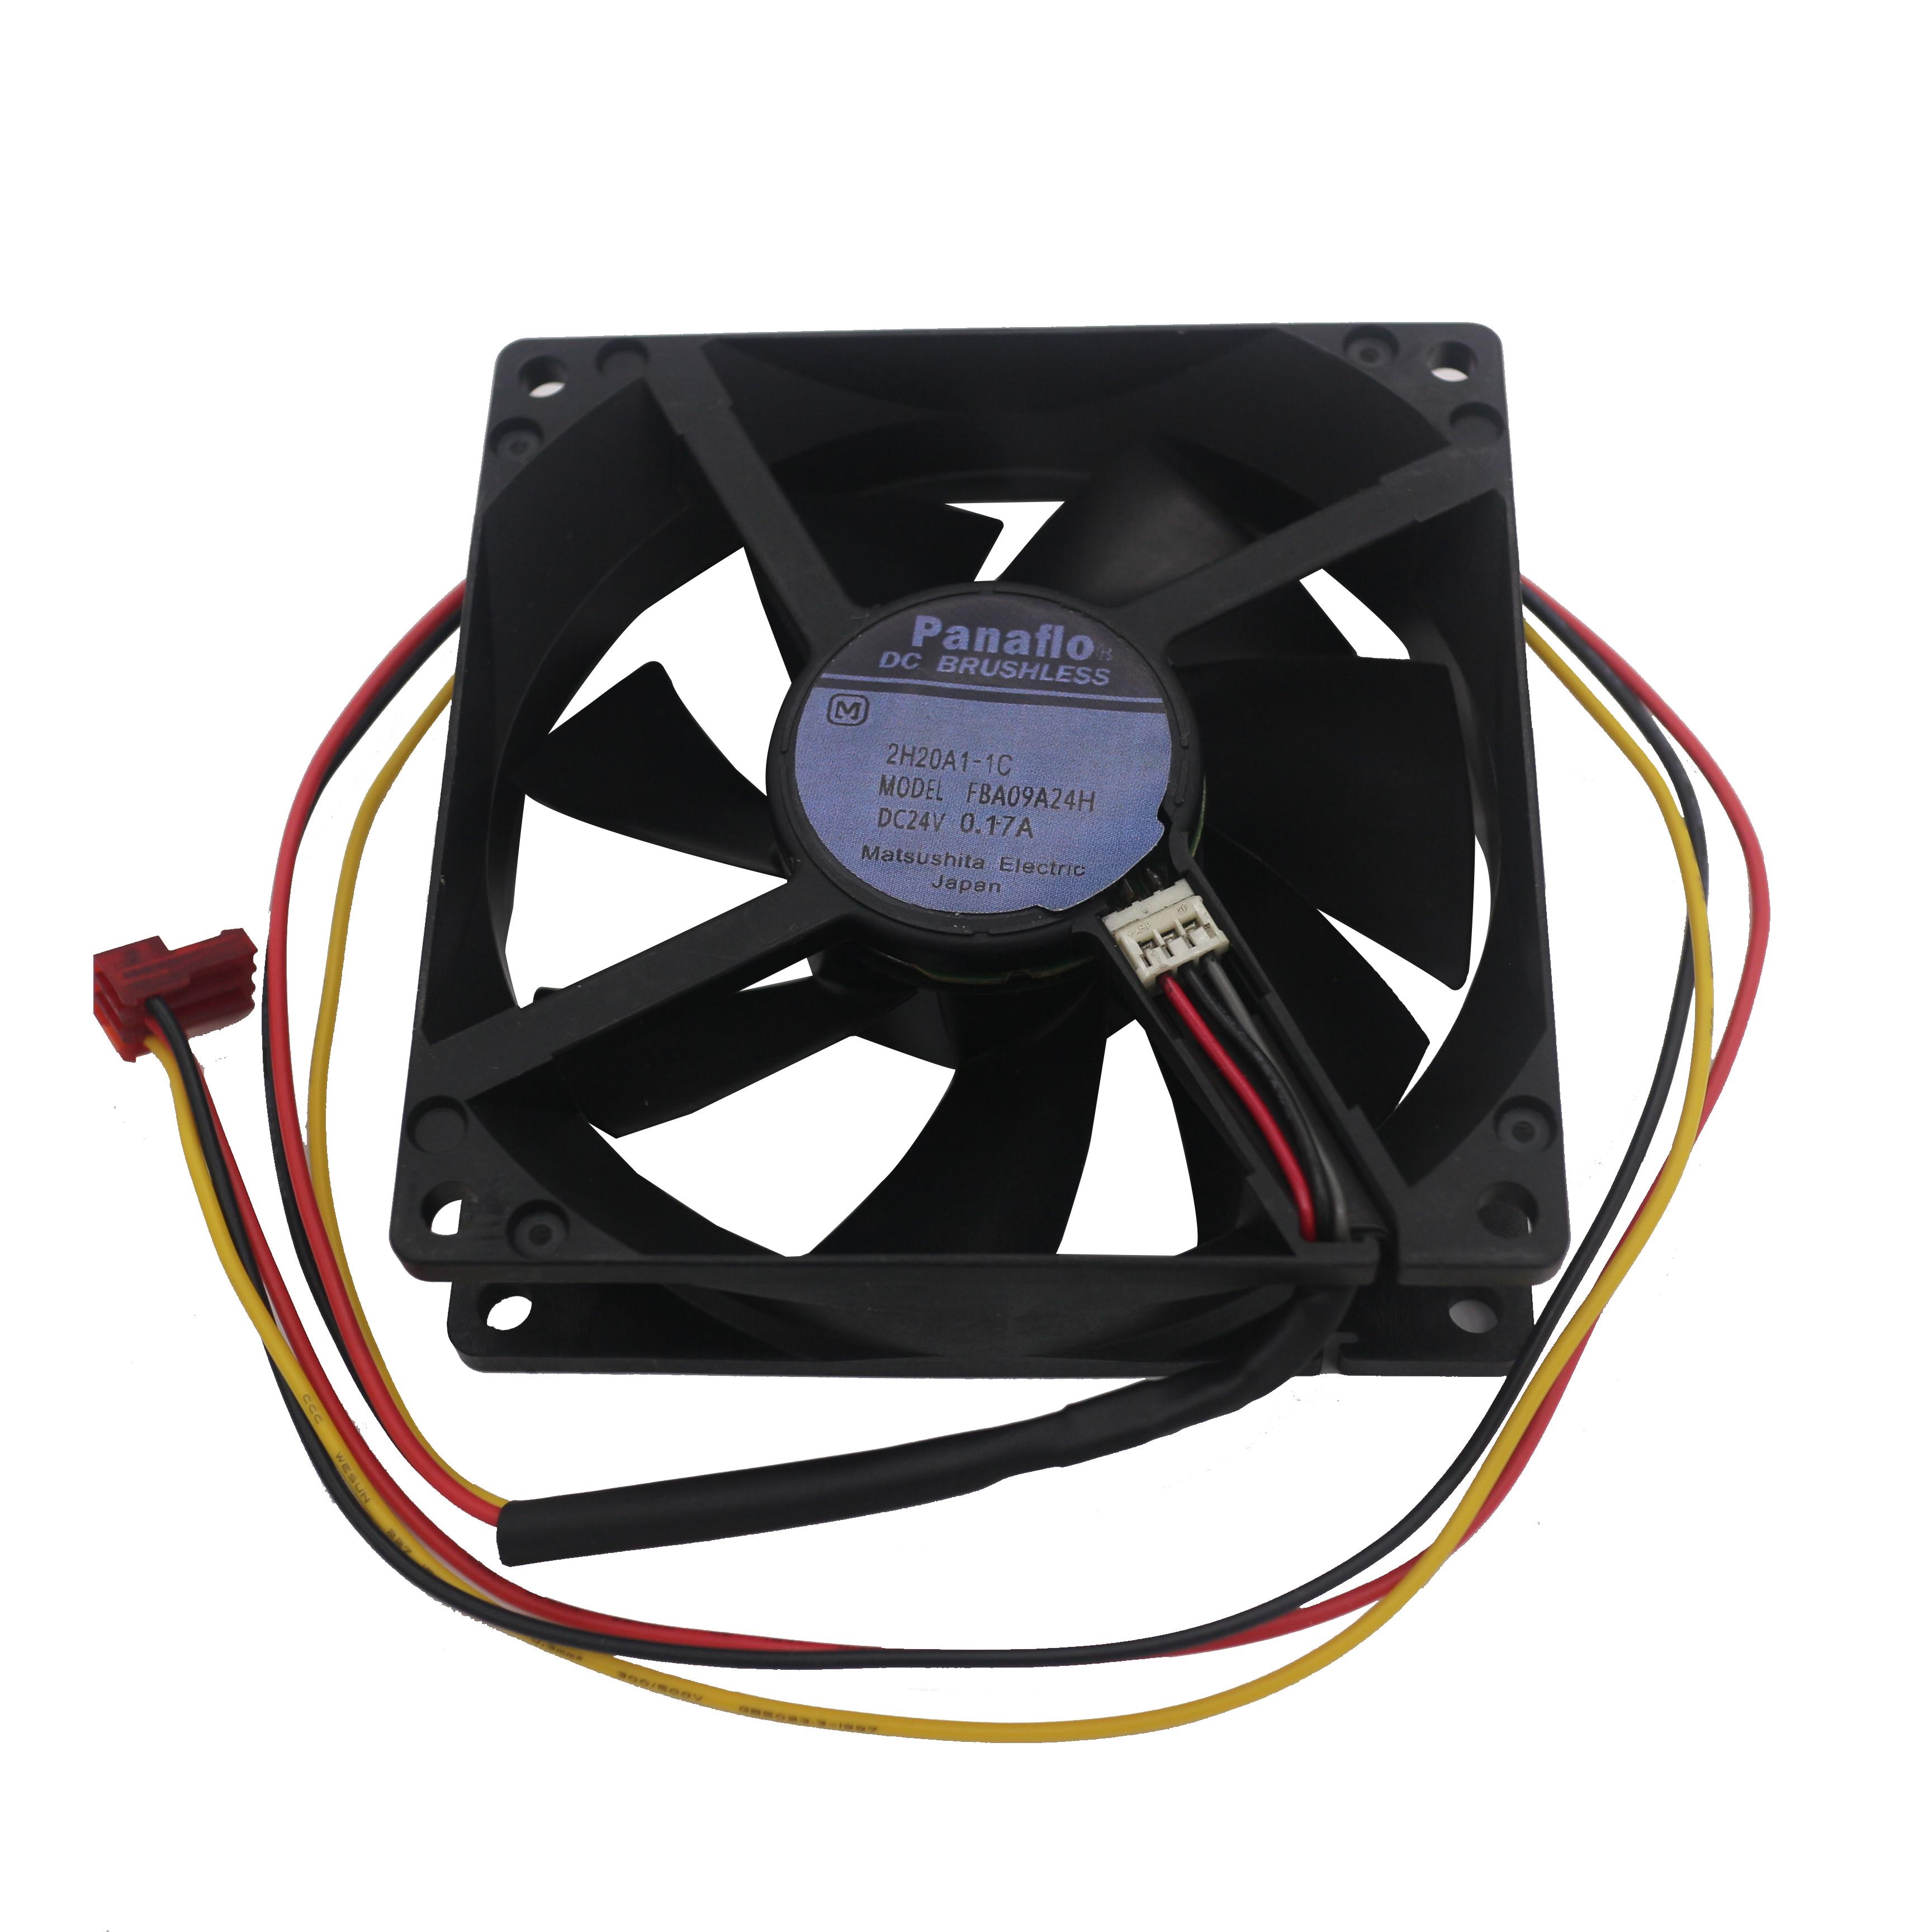 Hot sellCC-PC1334 air fan alternative spare part for citronix printer